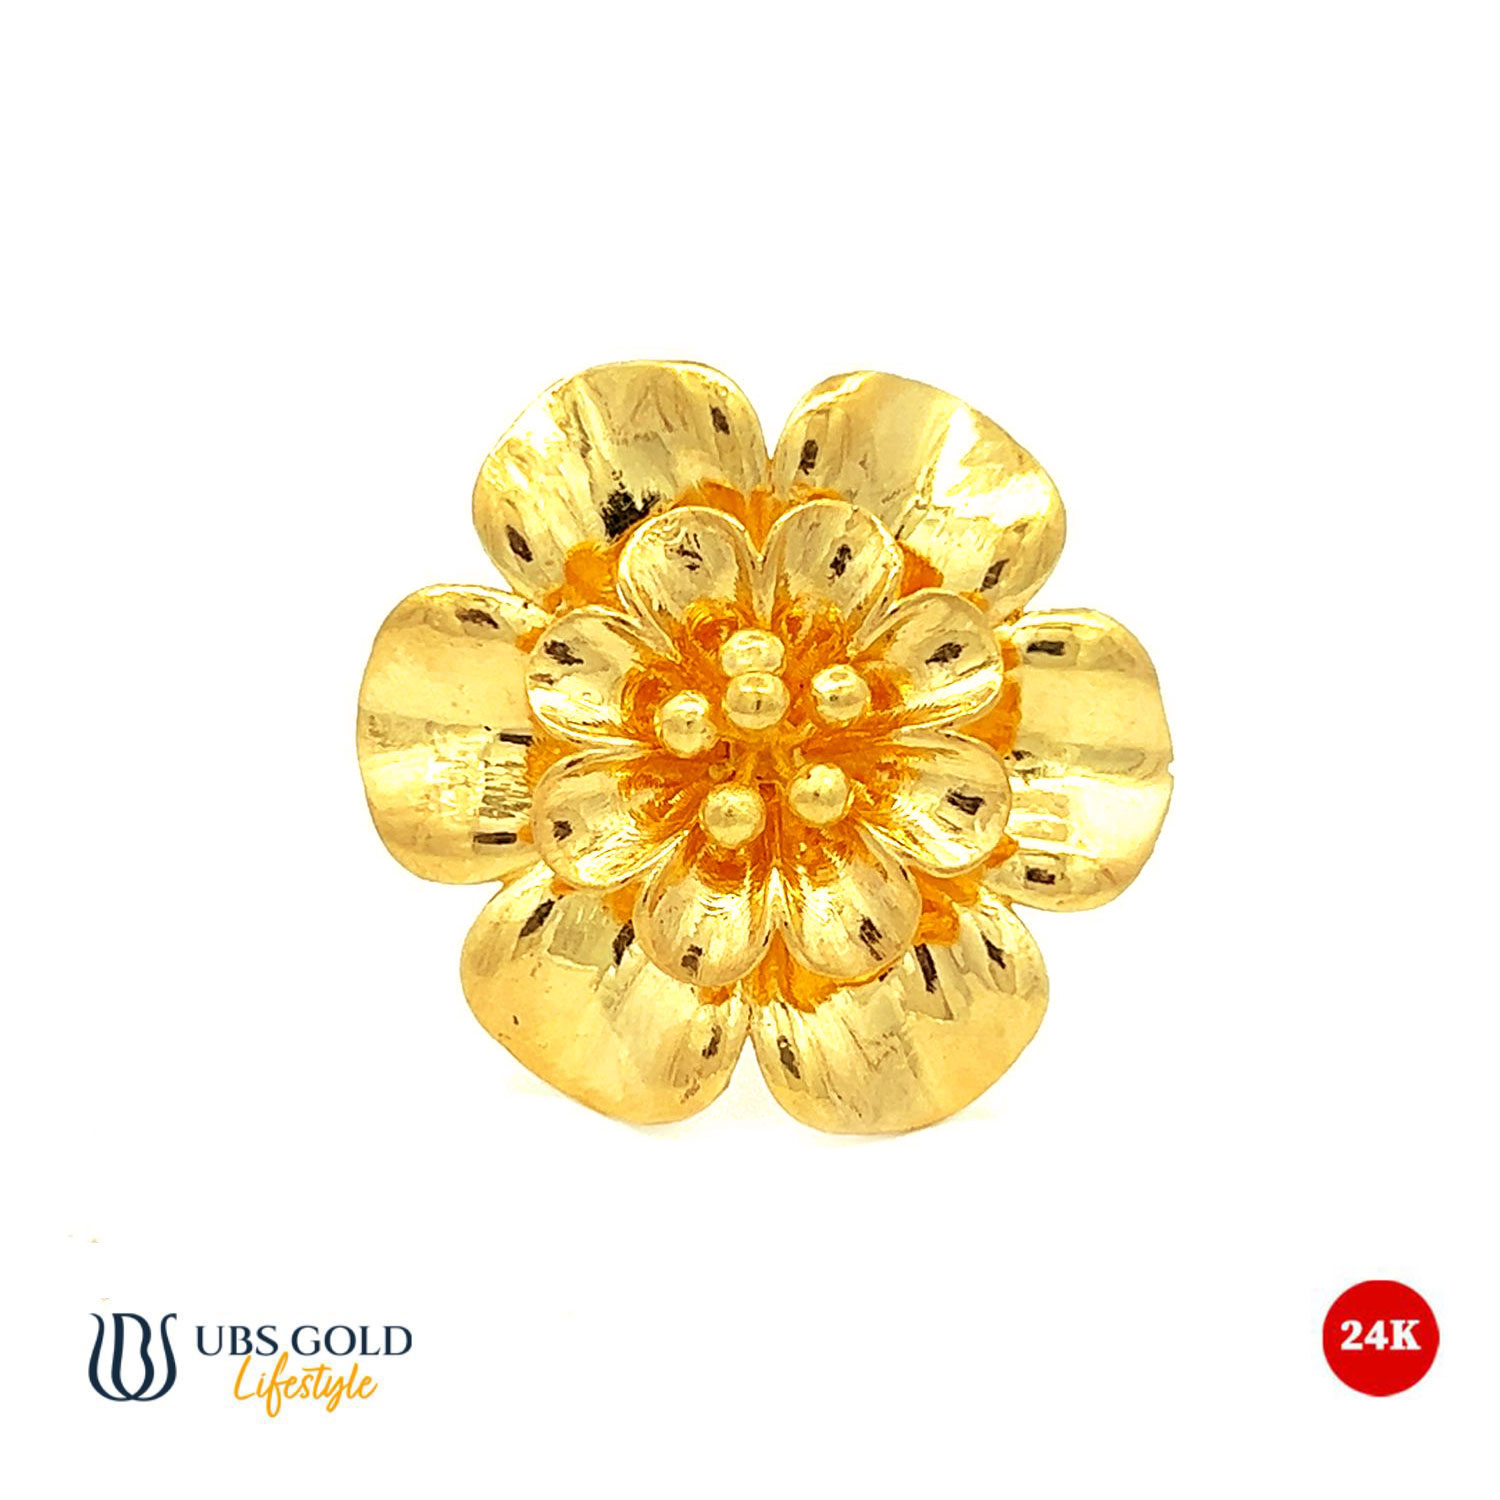 UBS Gold Cincin Emas - Cdc0103 - 24K